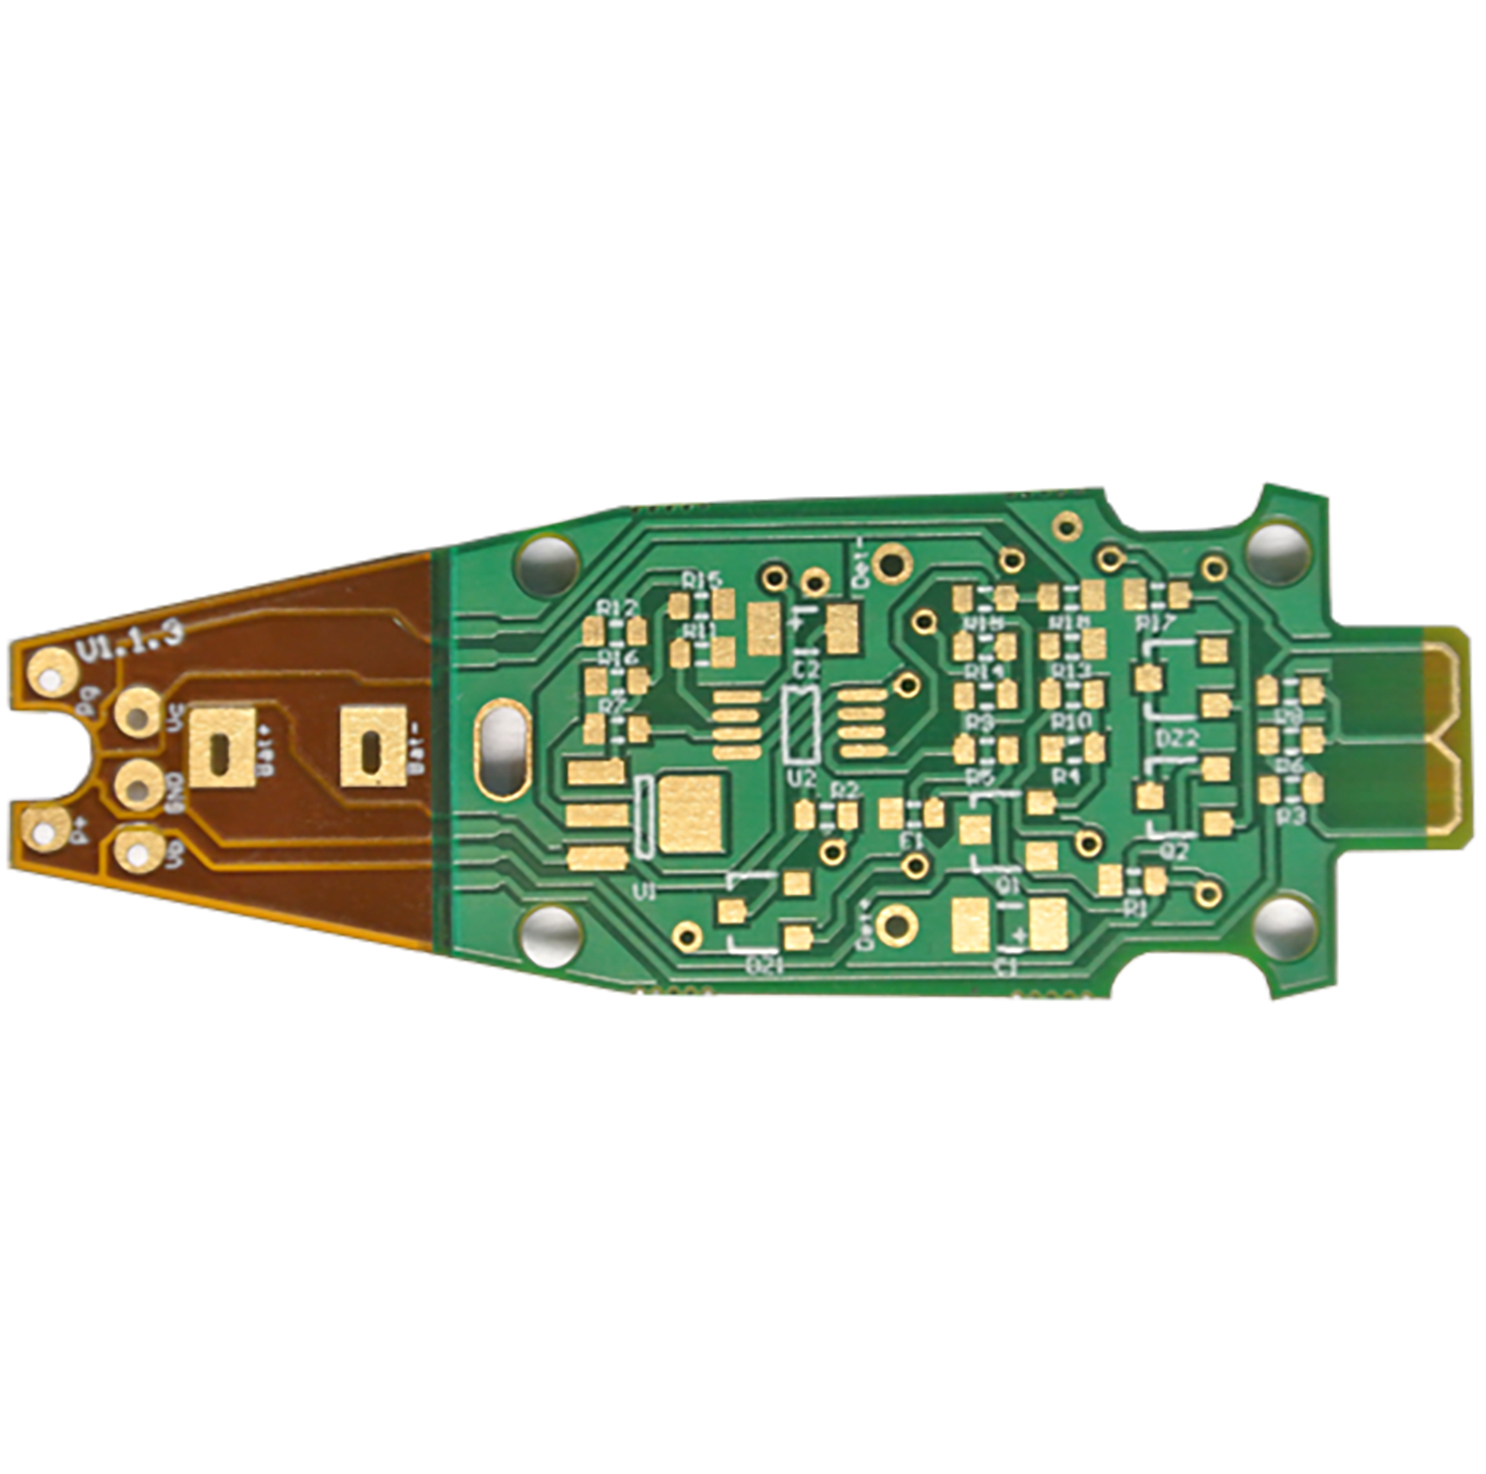 Rigid-Flex PCB consumer electronics PCB